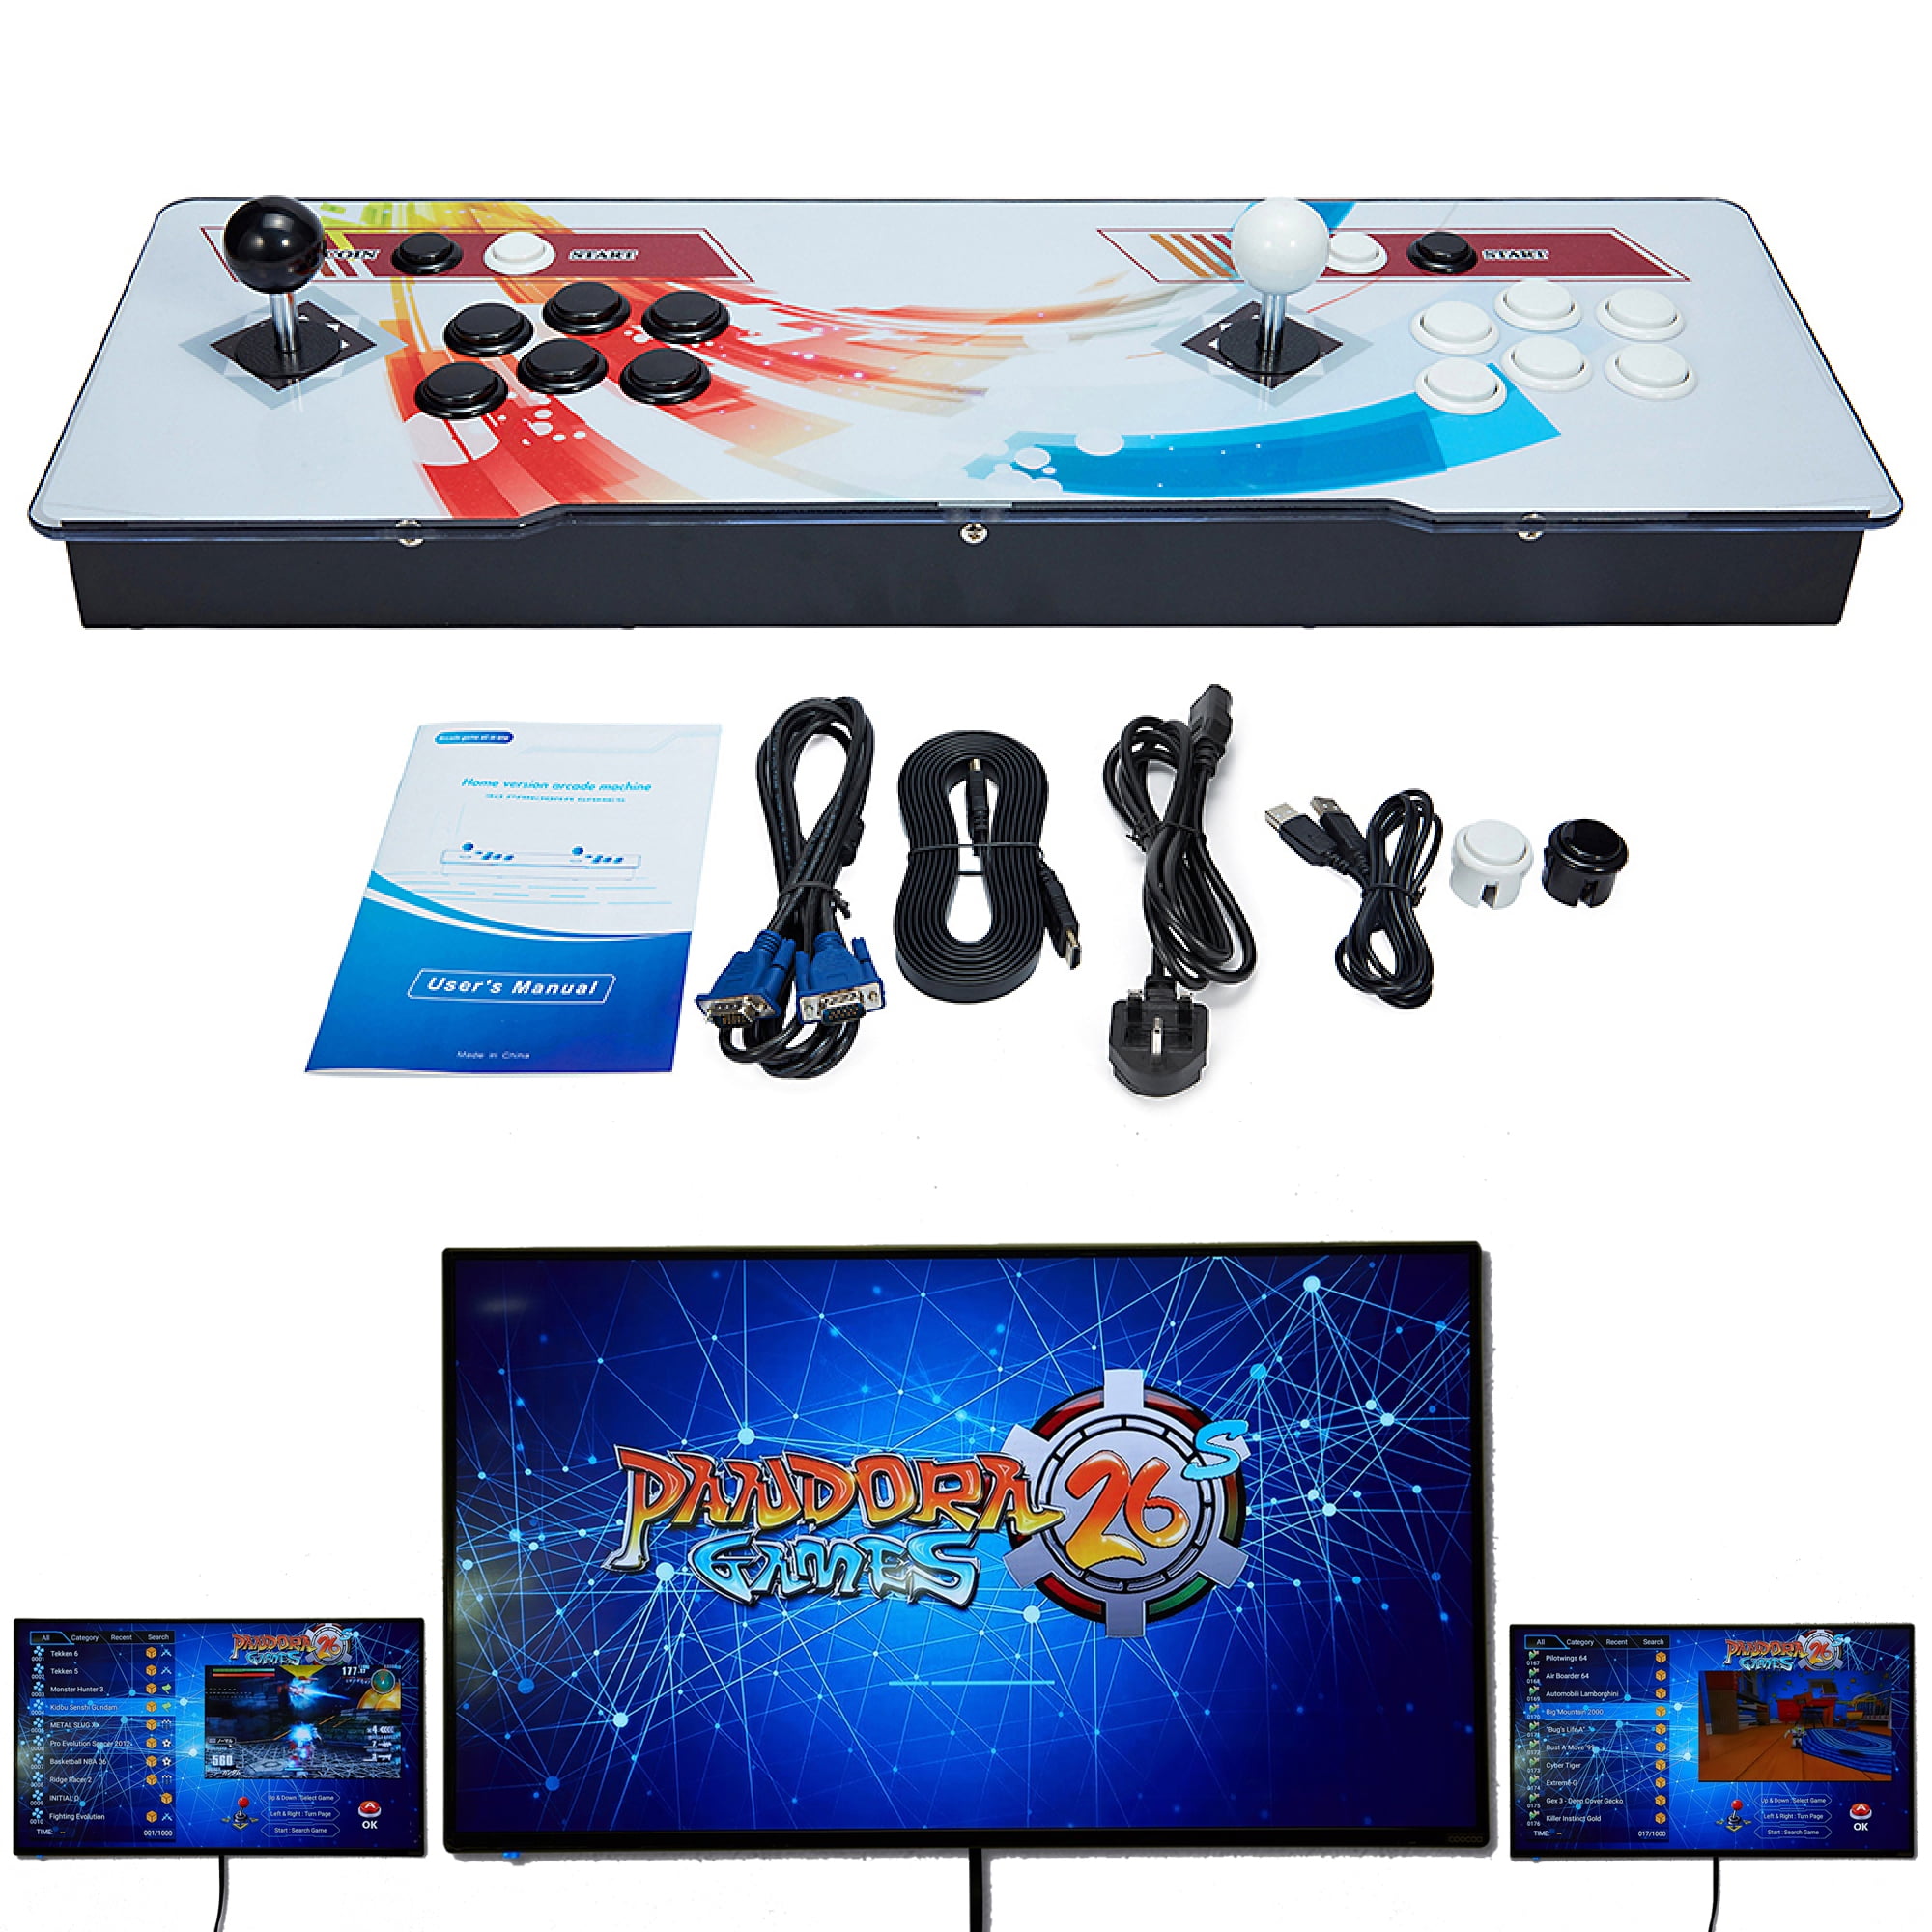  FVBADE[10000 Games in 1 Pandora Box Arcade Game